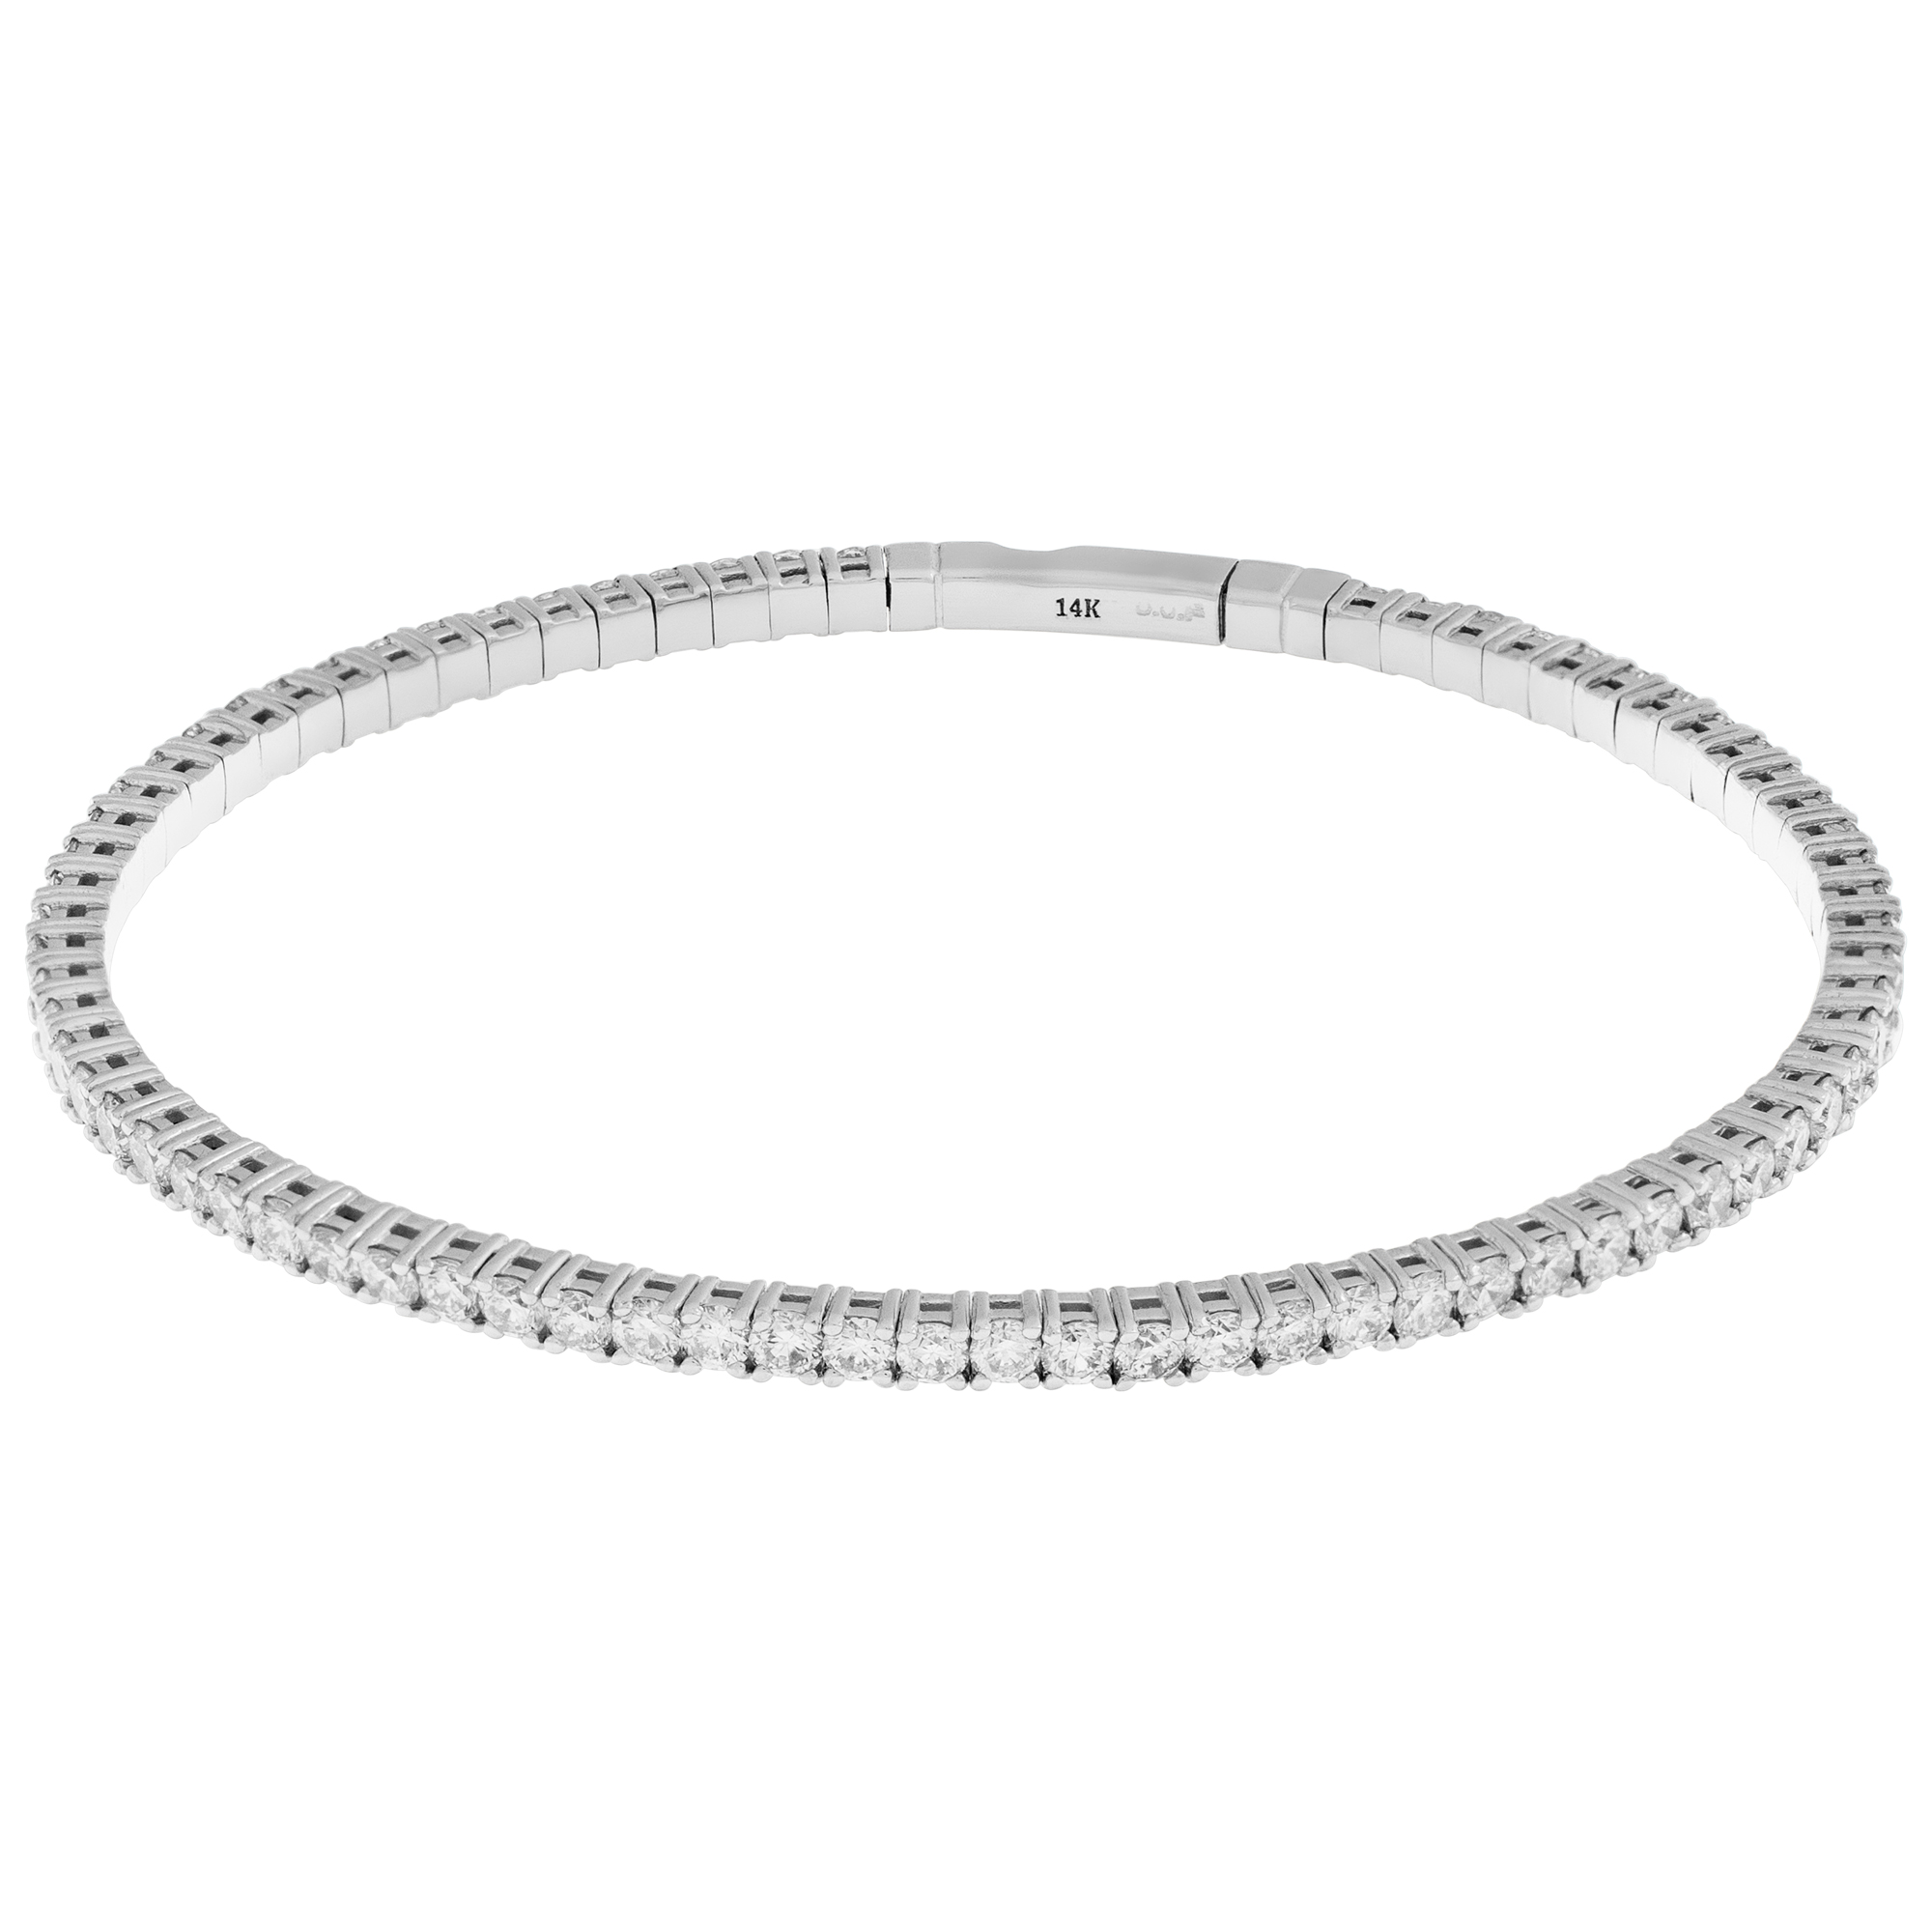 Diamond bracelet set in 14k white gold with 3.45 carats in diamonds.